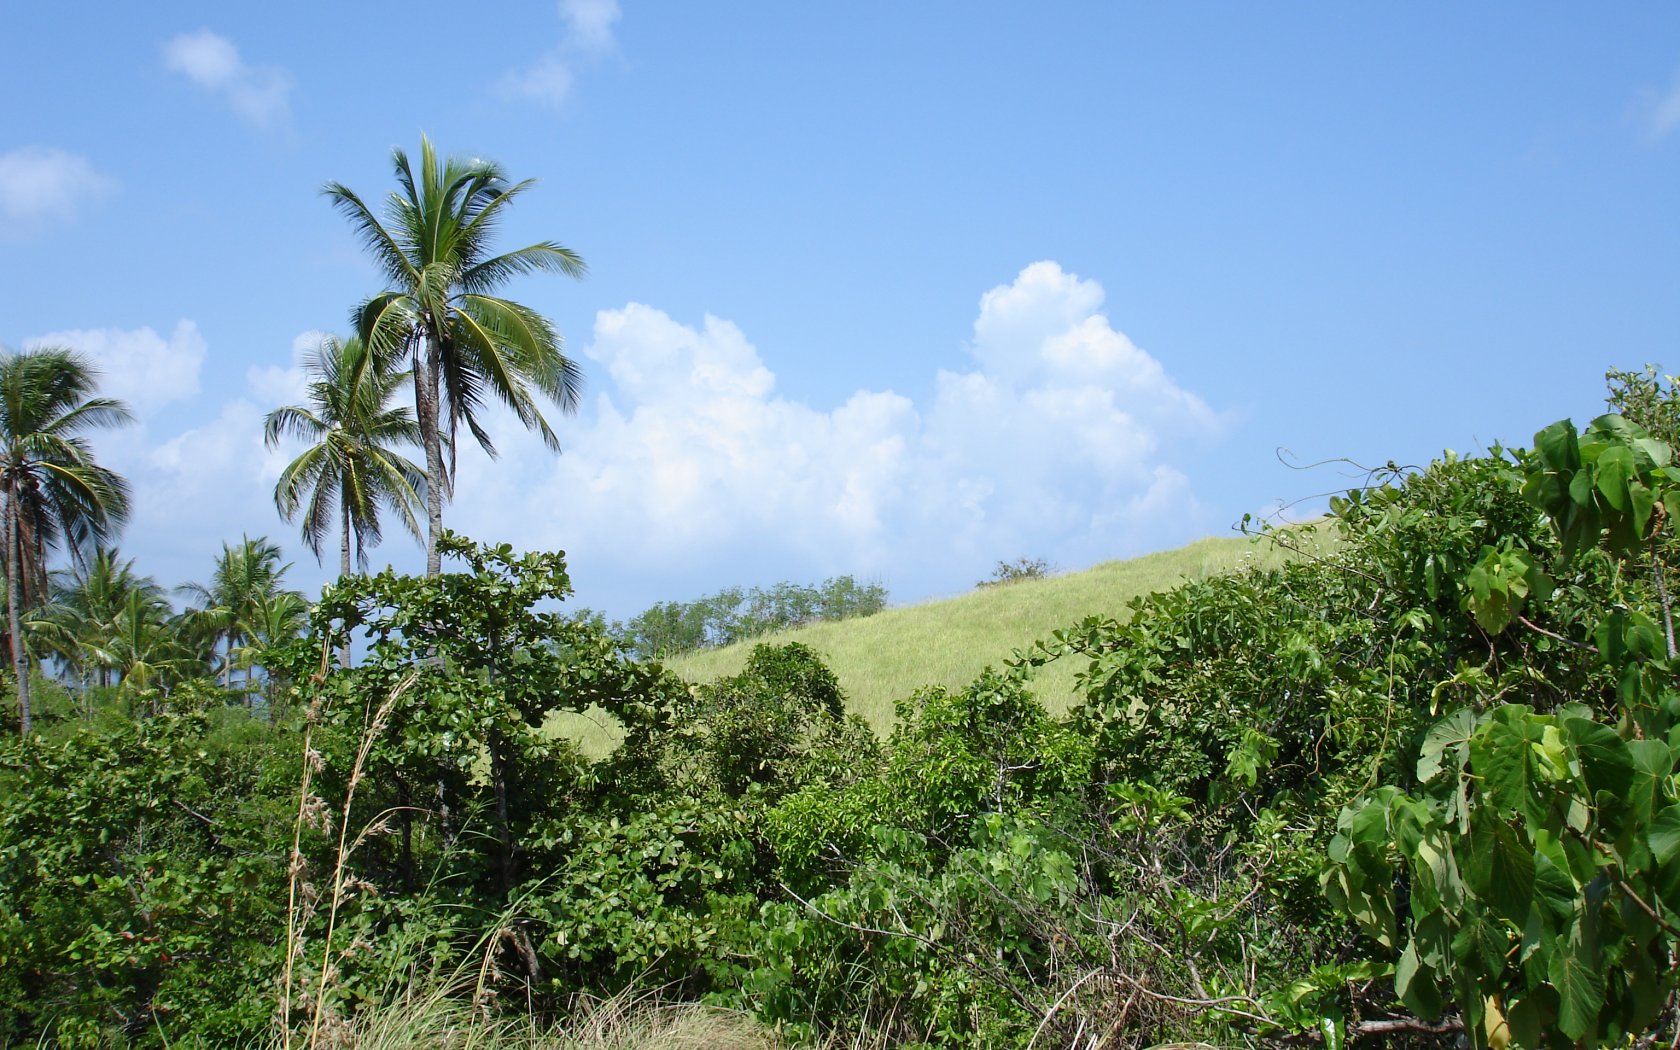 Tropical island nature widescreen desktop backgrounds